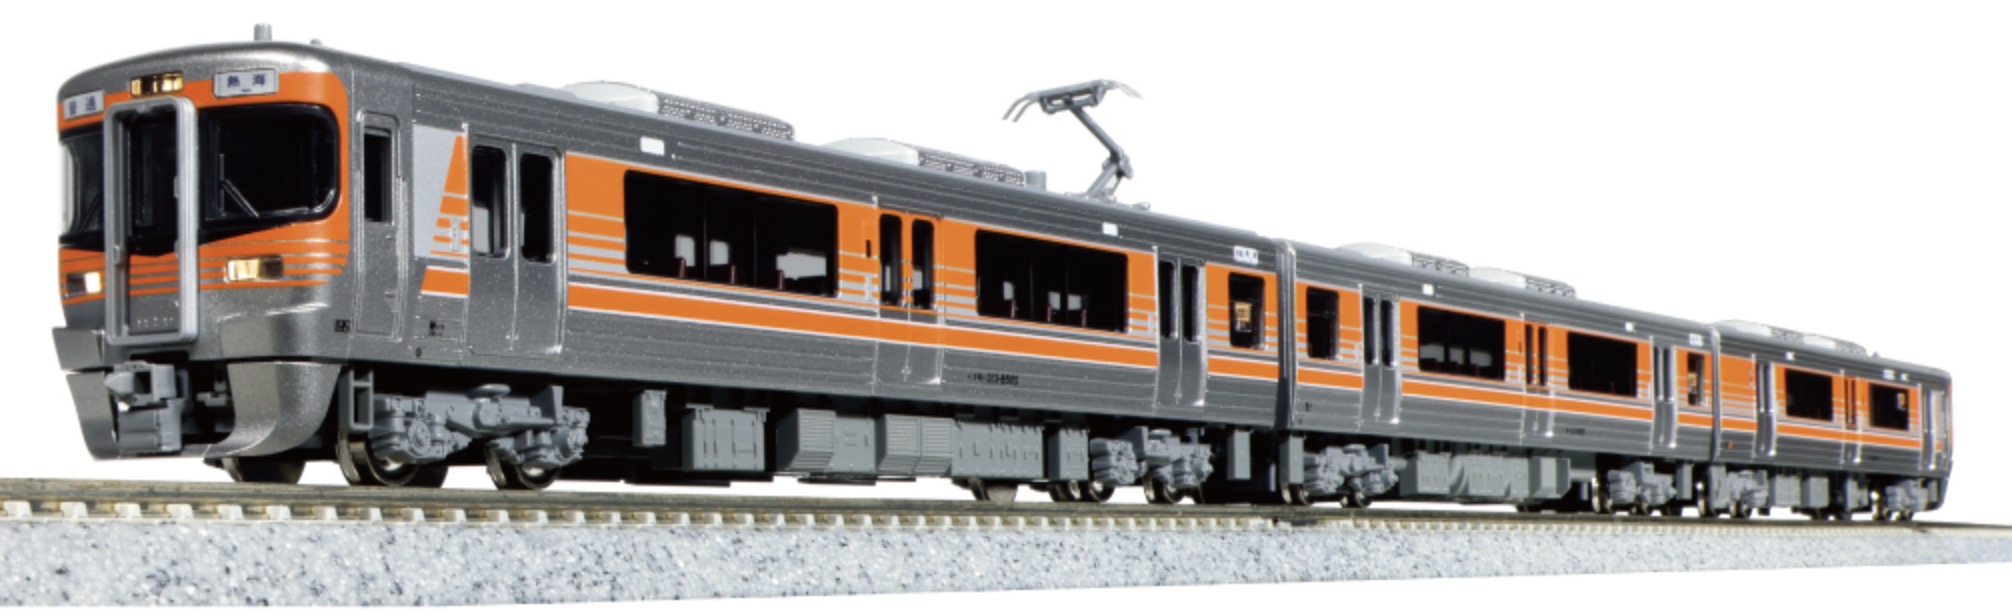 N Scale - Kato - 10-1749 - Passenger Train, Electric, Series 313 - Japan Railways Central - 3-Car Set